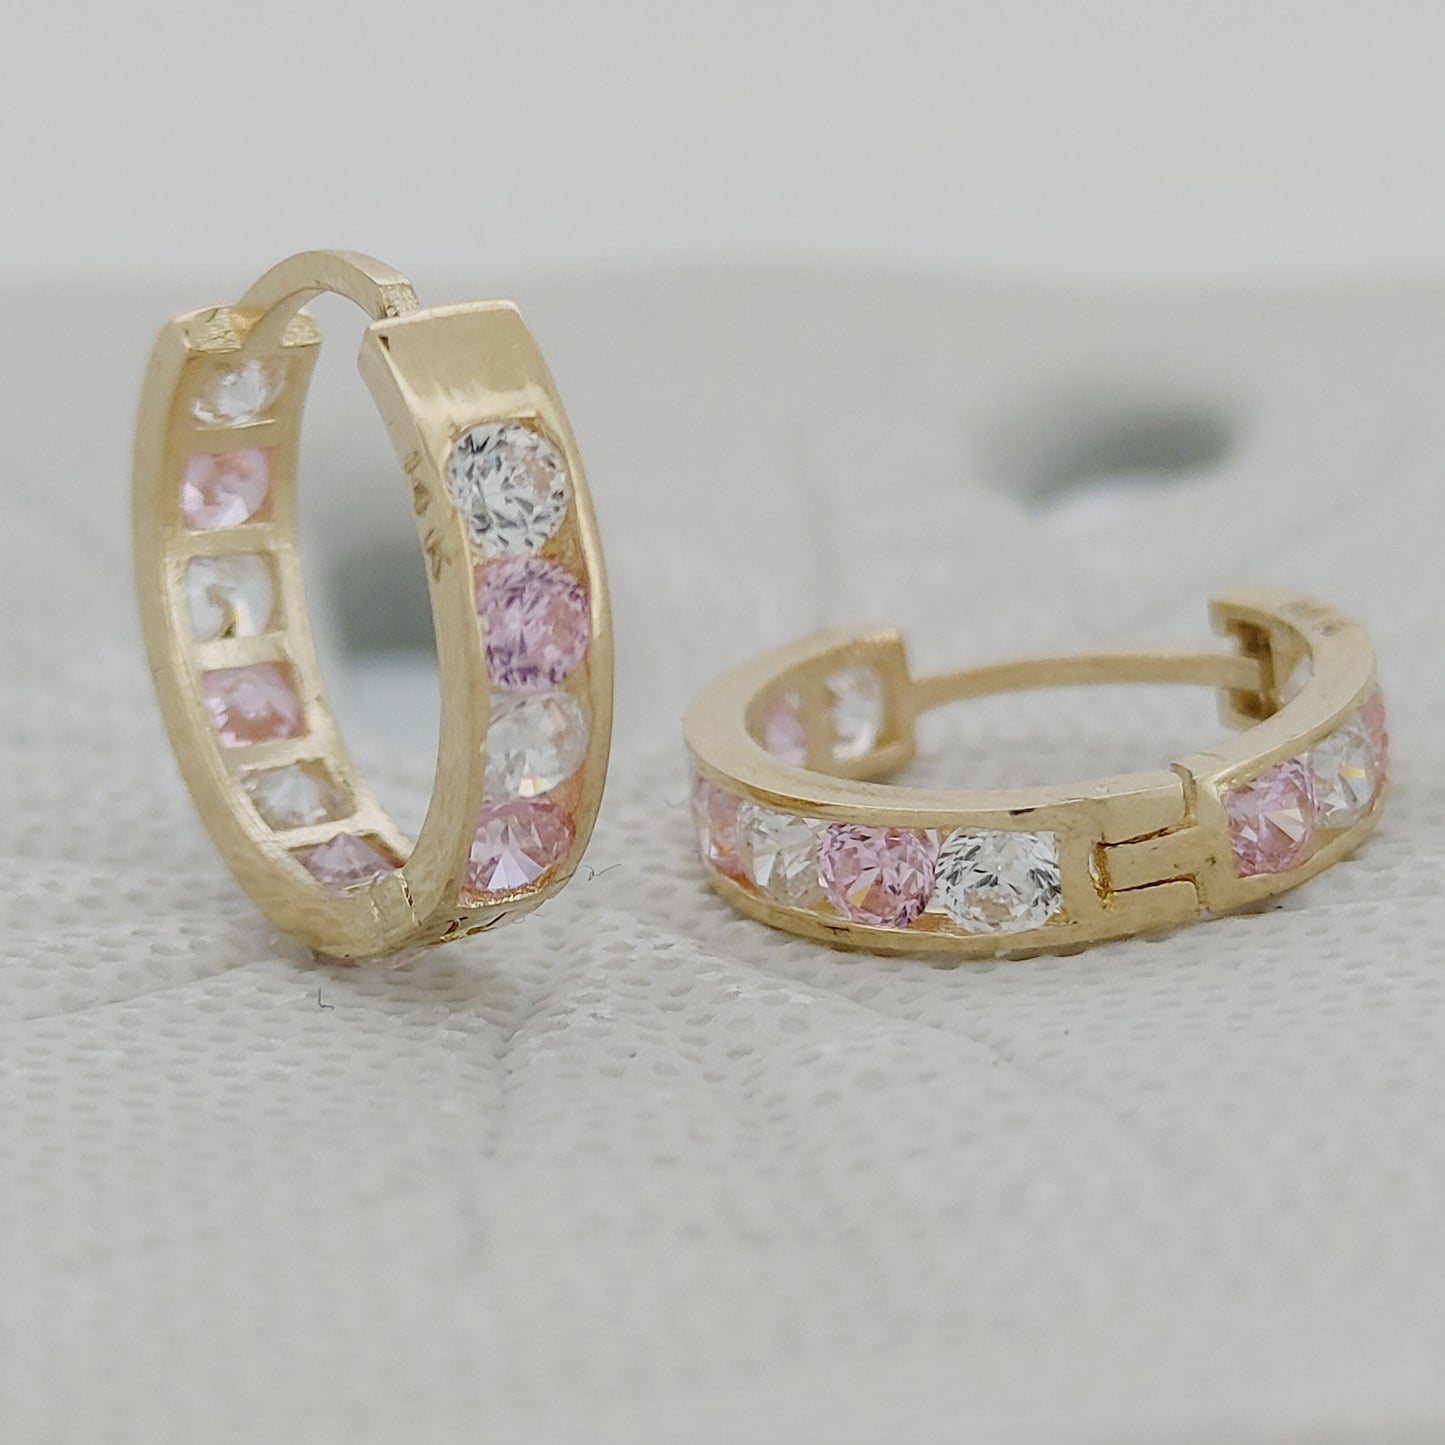 14k Gold Clear & Pink CZ Earrings, Huggie Style, High-Quality Jewelry, Women's Earring, Gift Idea, | Heart of Jewelry | Los Angeles